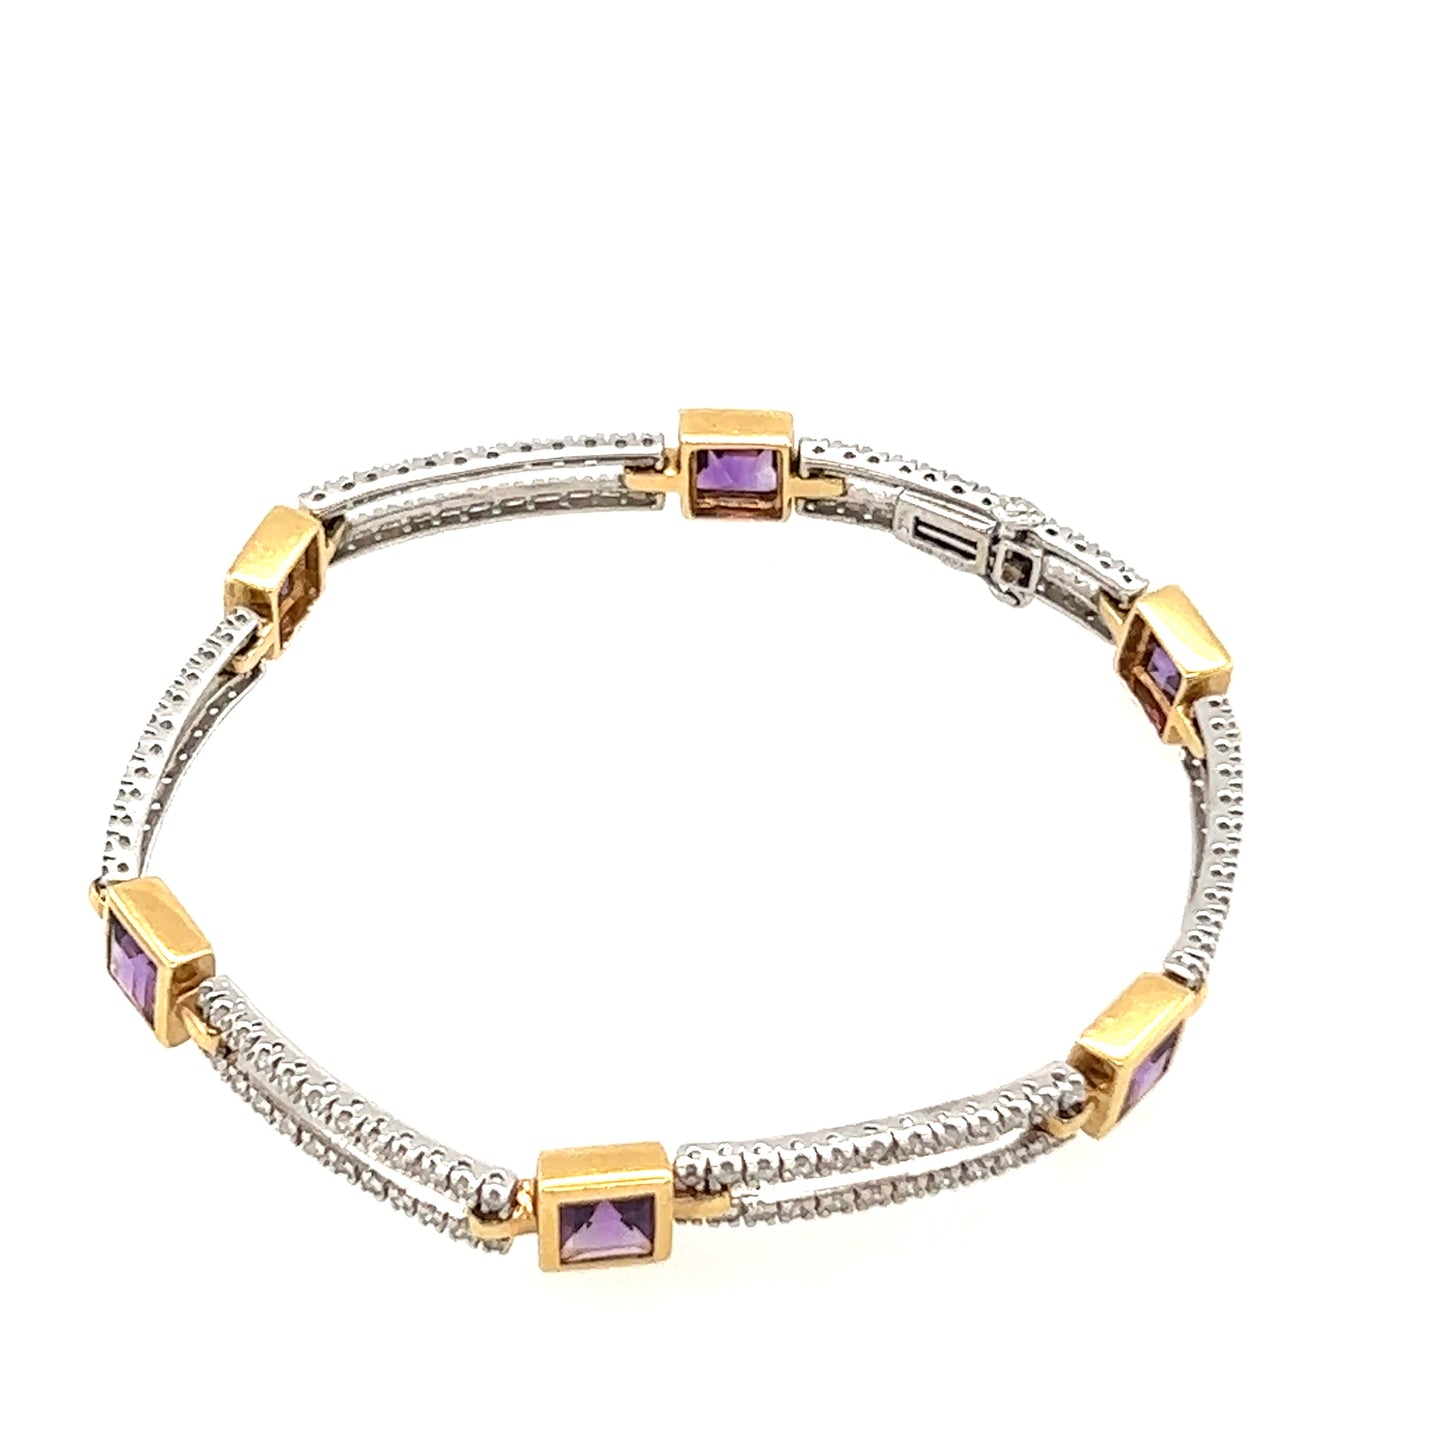 14K Yellow Gold and white gold Amethyst Diamond Bracelet very elegant pice.